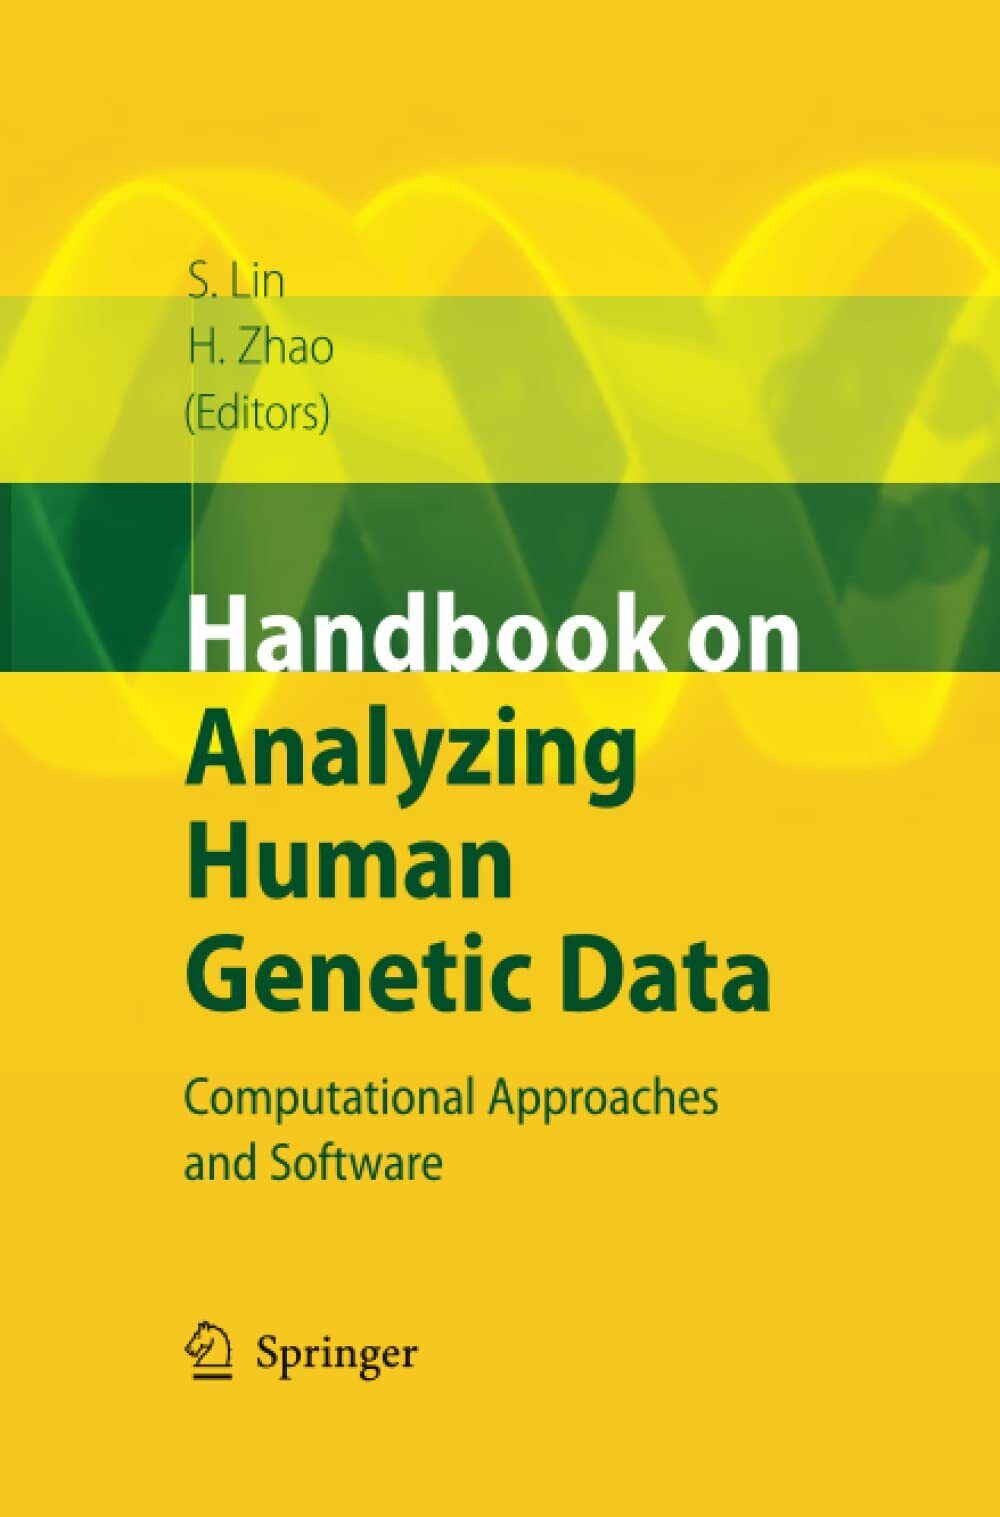 Handbook on Analyzing Human Genetic Data - Shili Lin - Springer, 2014